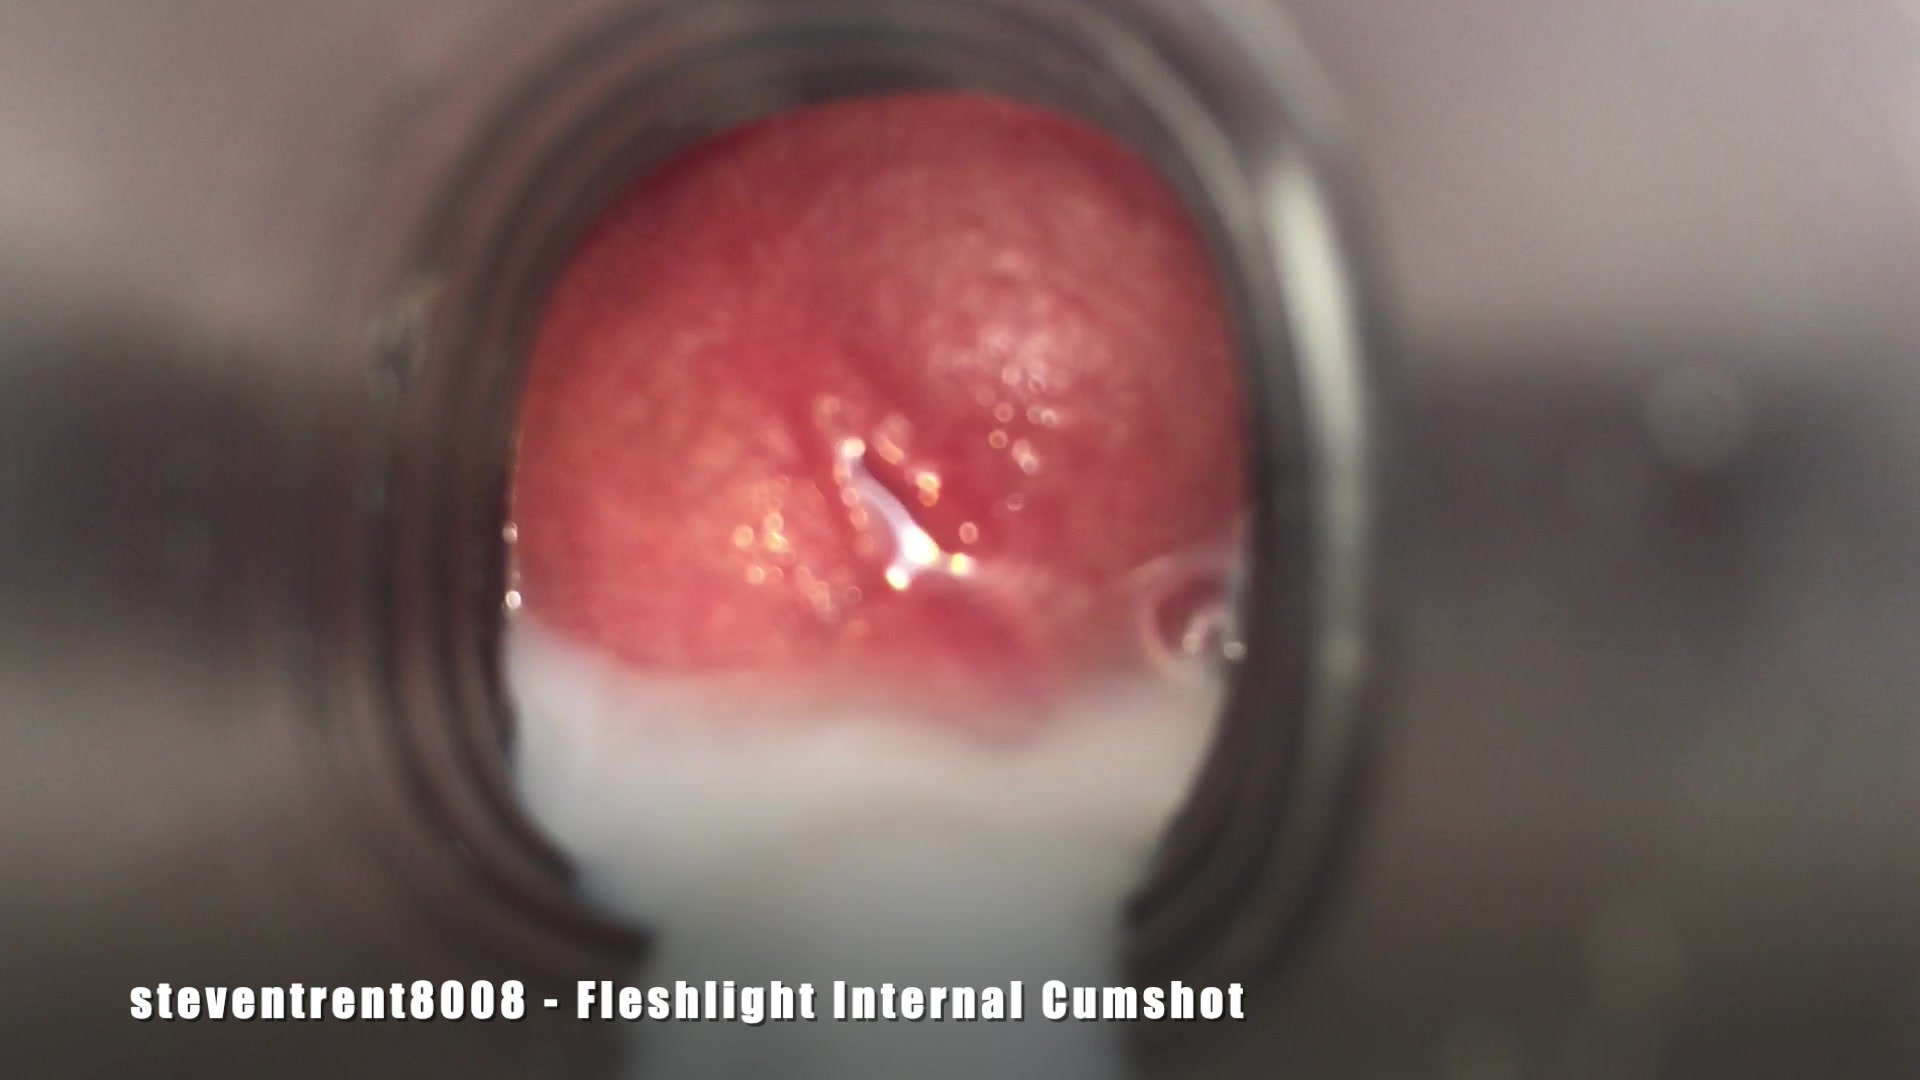 Fleshlight Internal Cumshot - Steventrent8008 - Fleshlight Internal Cumshot - ThisVid.com